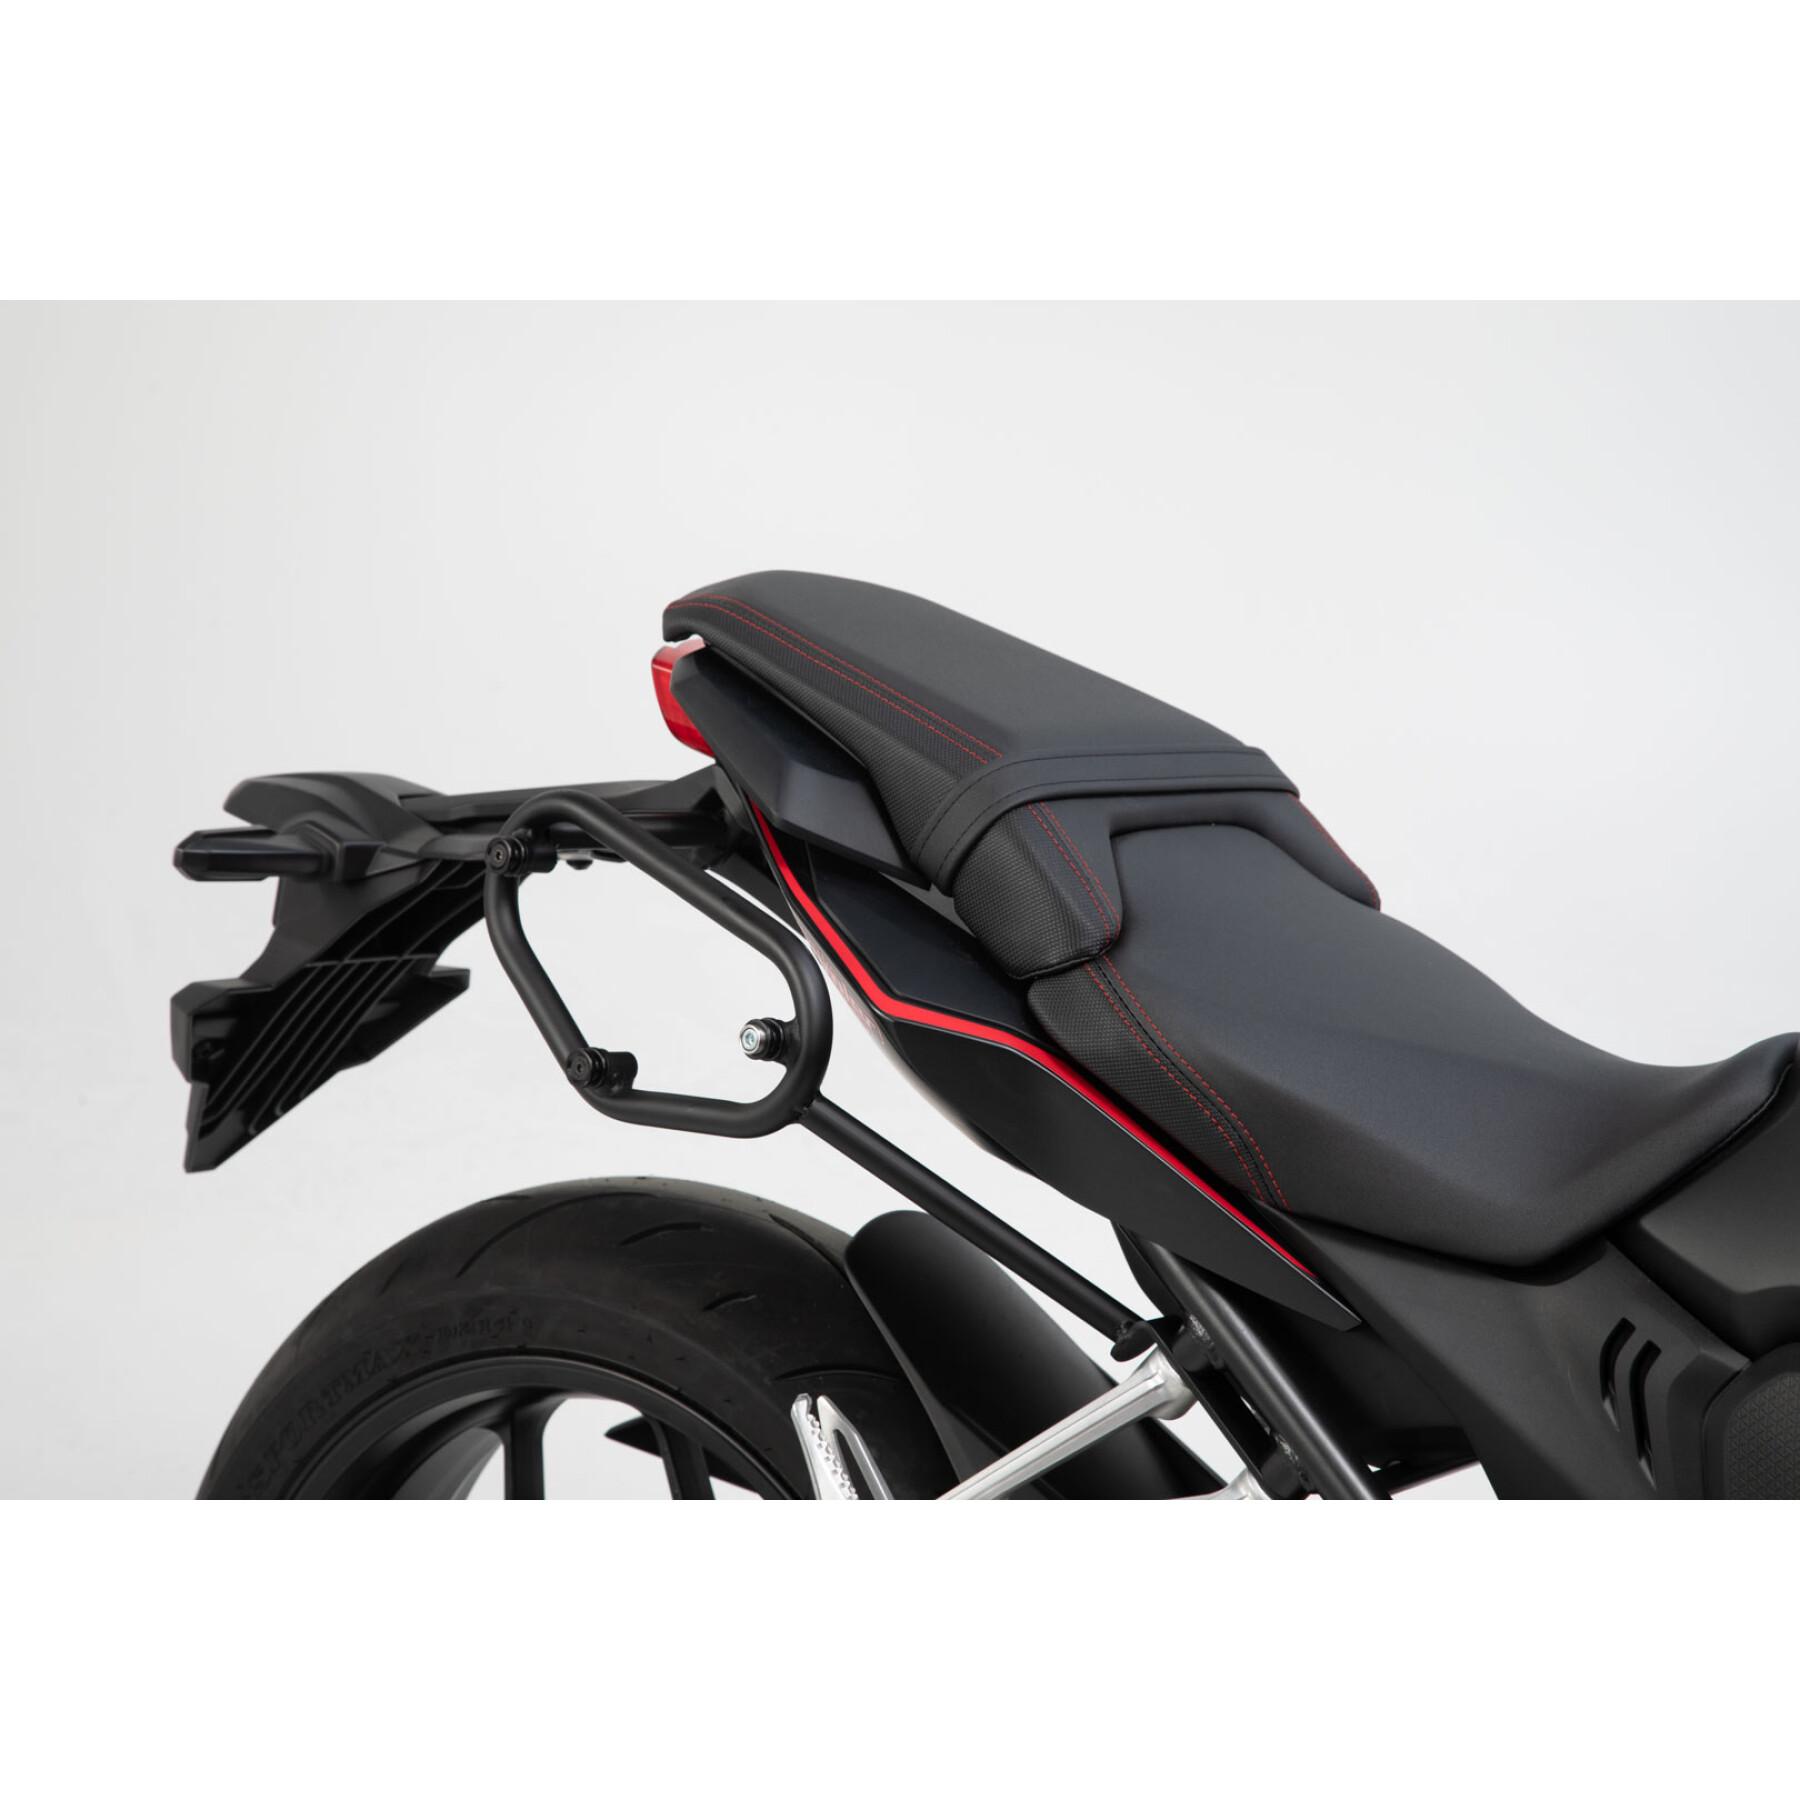 Motorcycle side case kit SW-Motech URBAN ABS 2x 16,5 l.Honda CBR650R / CB650R (18-).